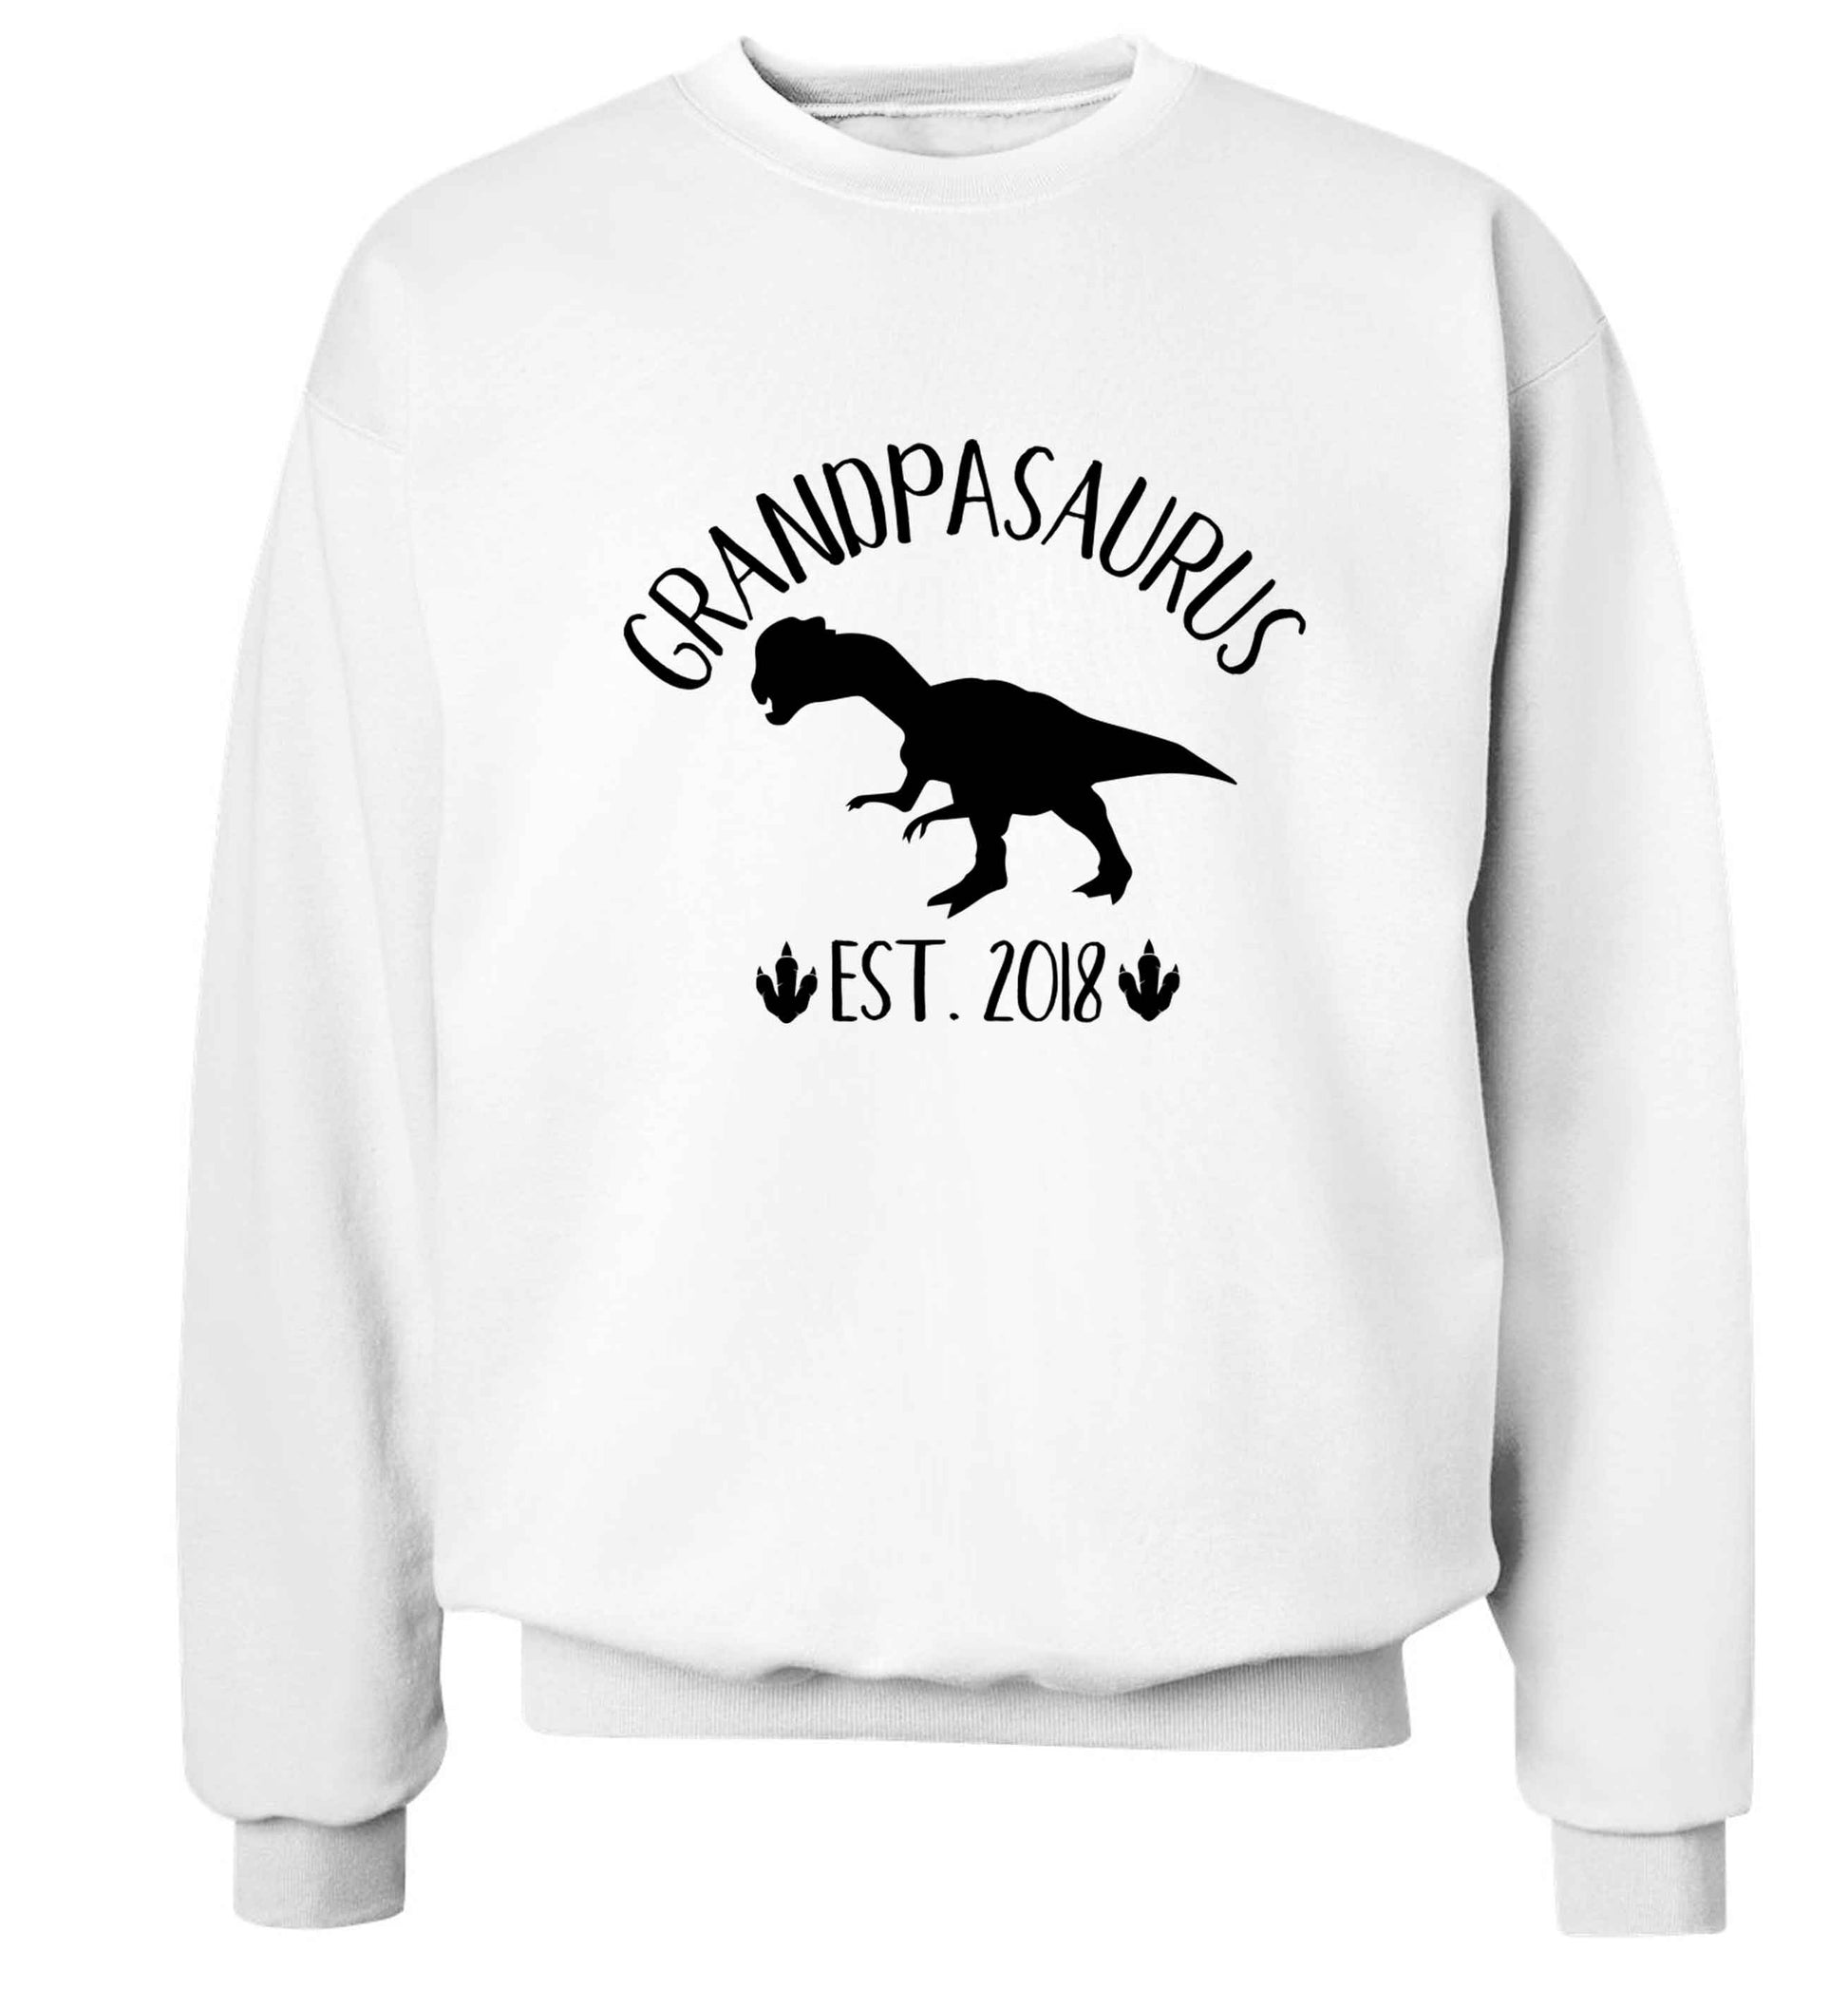 Personalised grandpasaurus since (custom date) Adult's unisex white Sweater 2XL